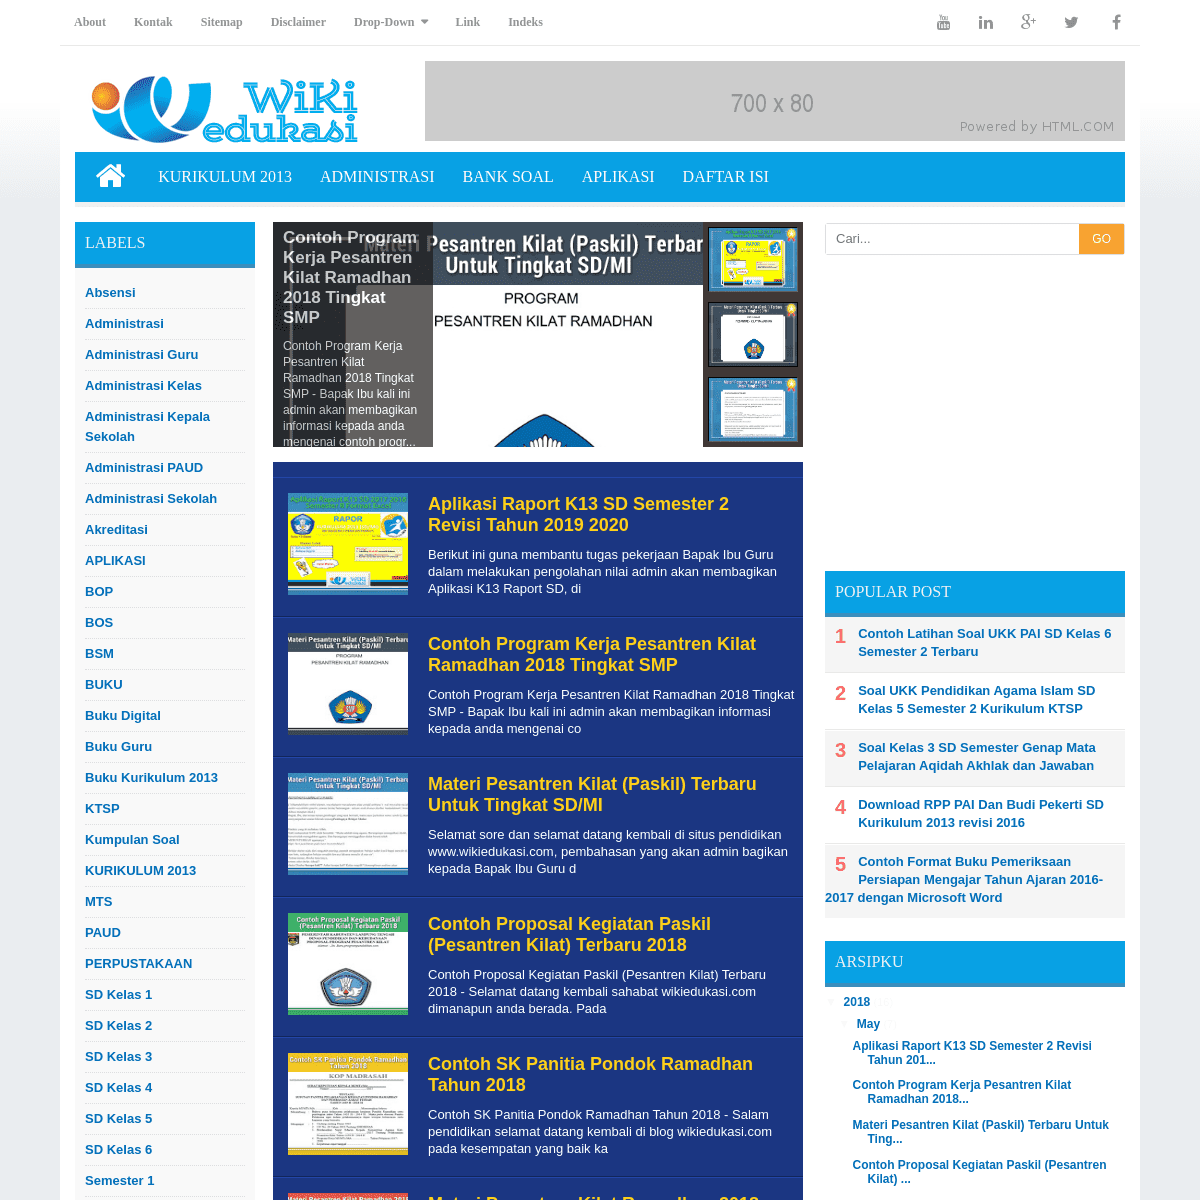 A complete backup of wikiedukasi.com